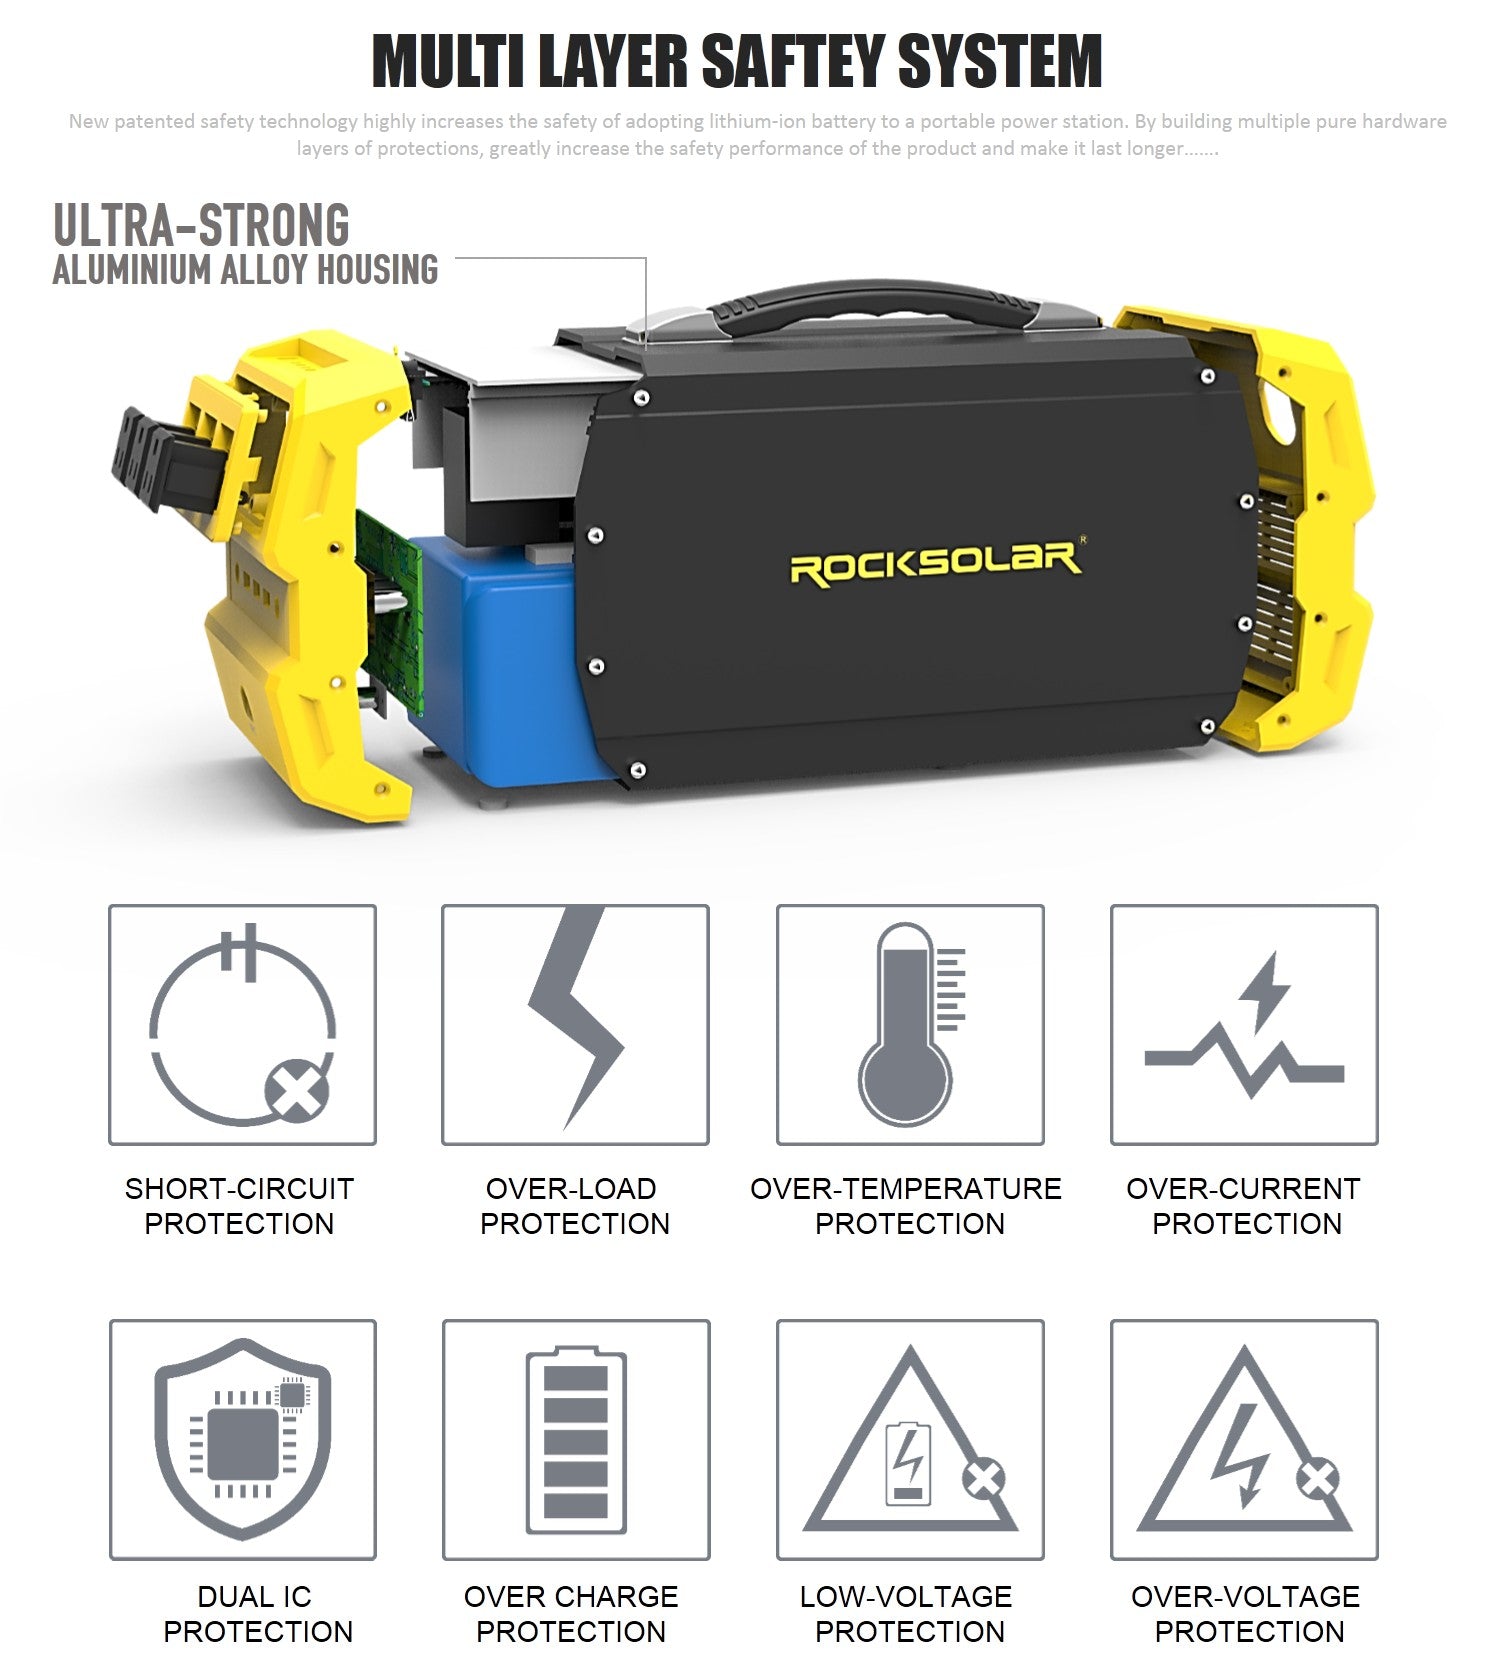 ROCKSOLAR RS650 portable power station/generator/solar power station 400 watt peak 600 watt multi-layer safety features